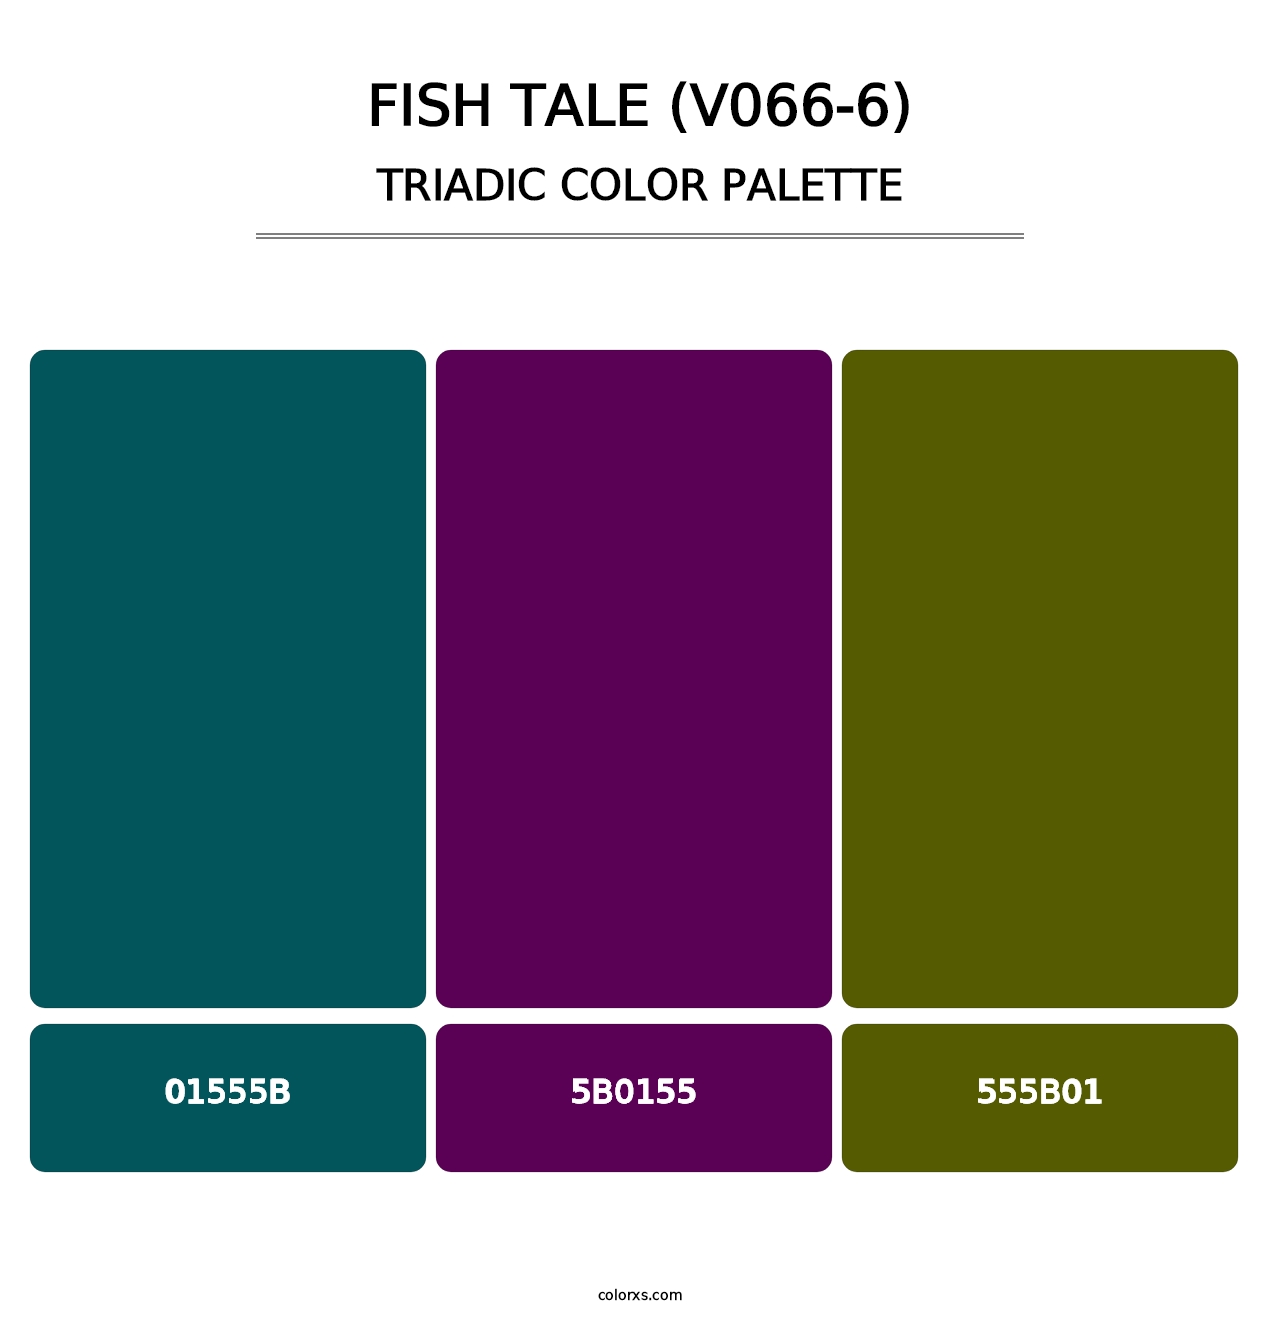 Fish Tale (V066-6) - Triadic Color Palette